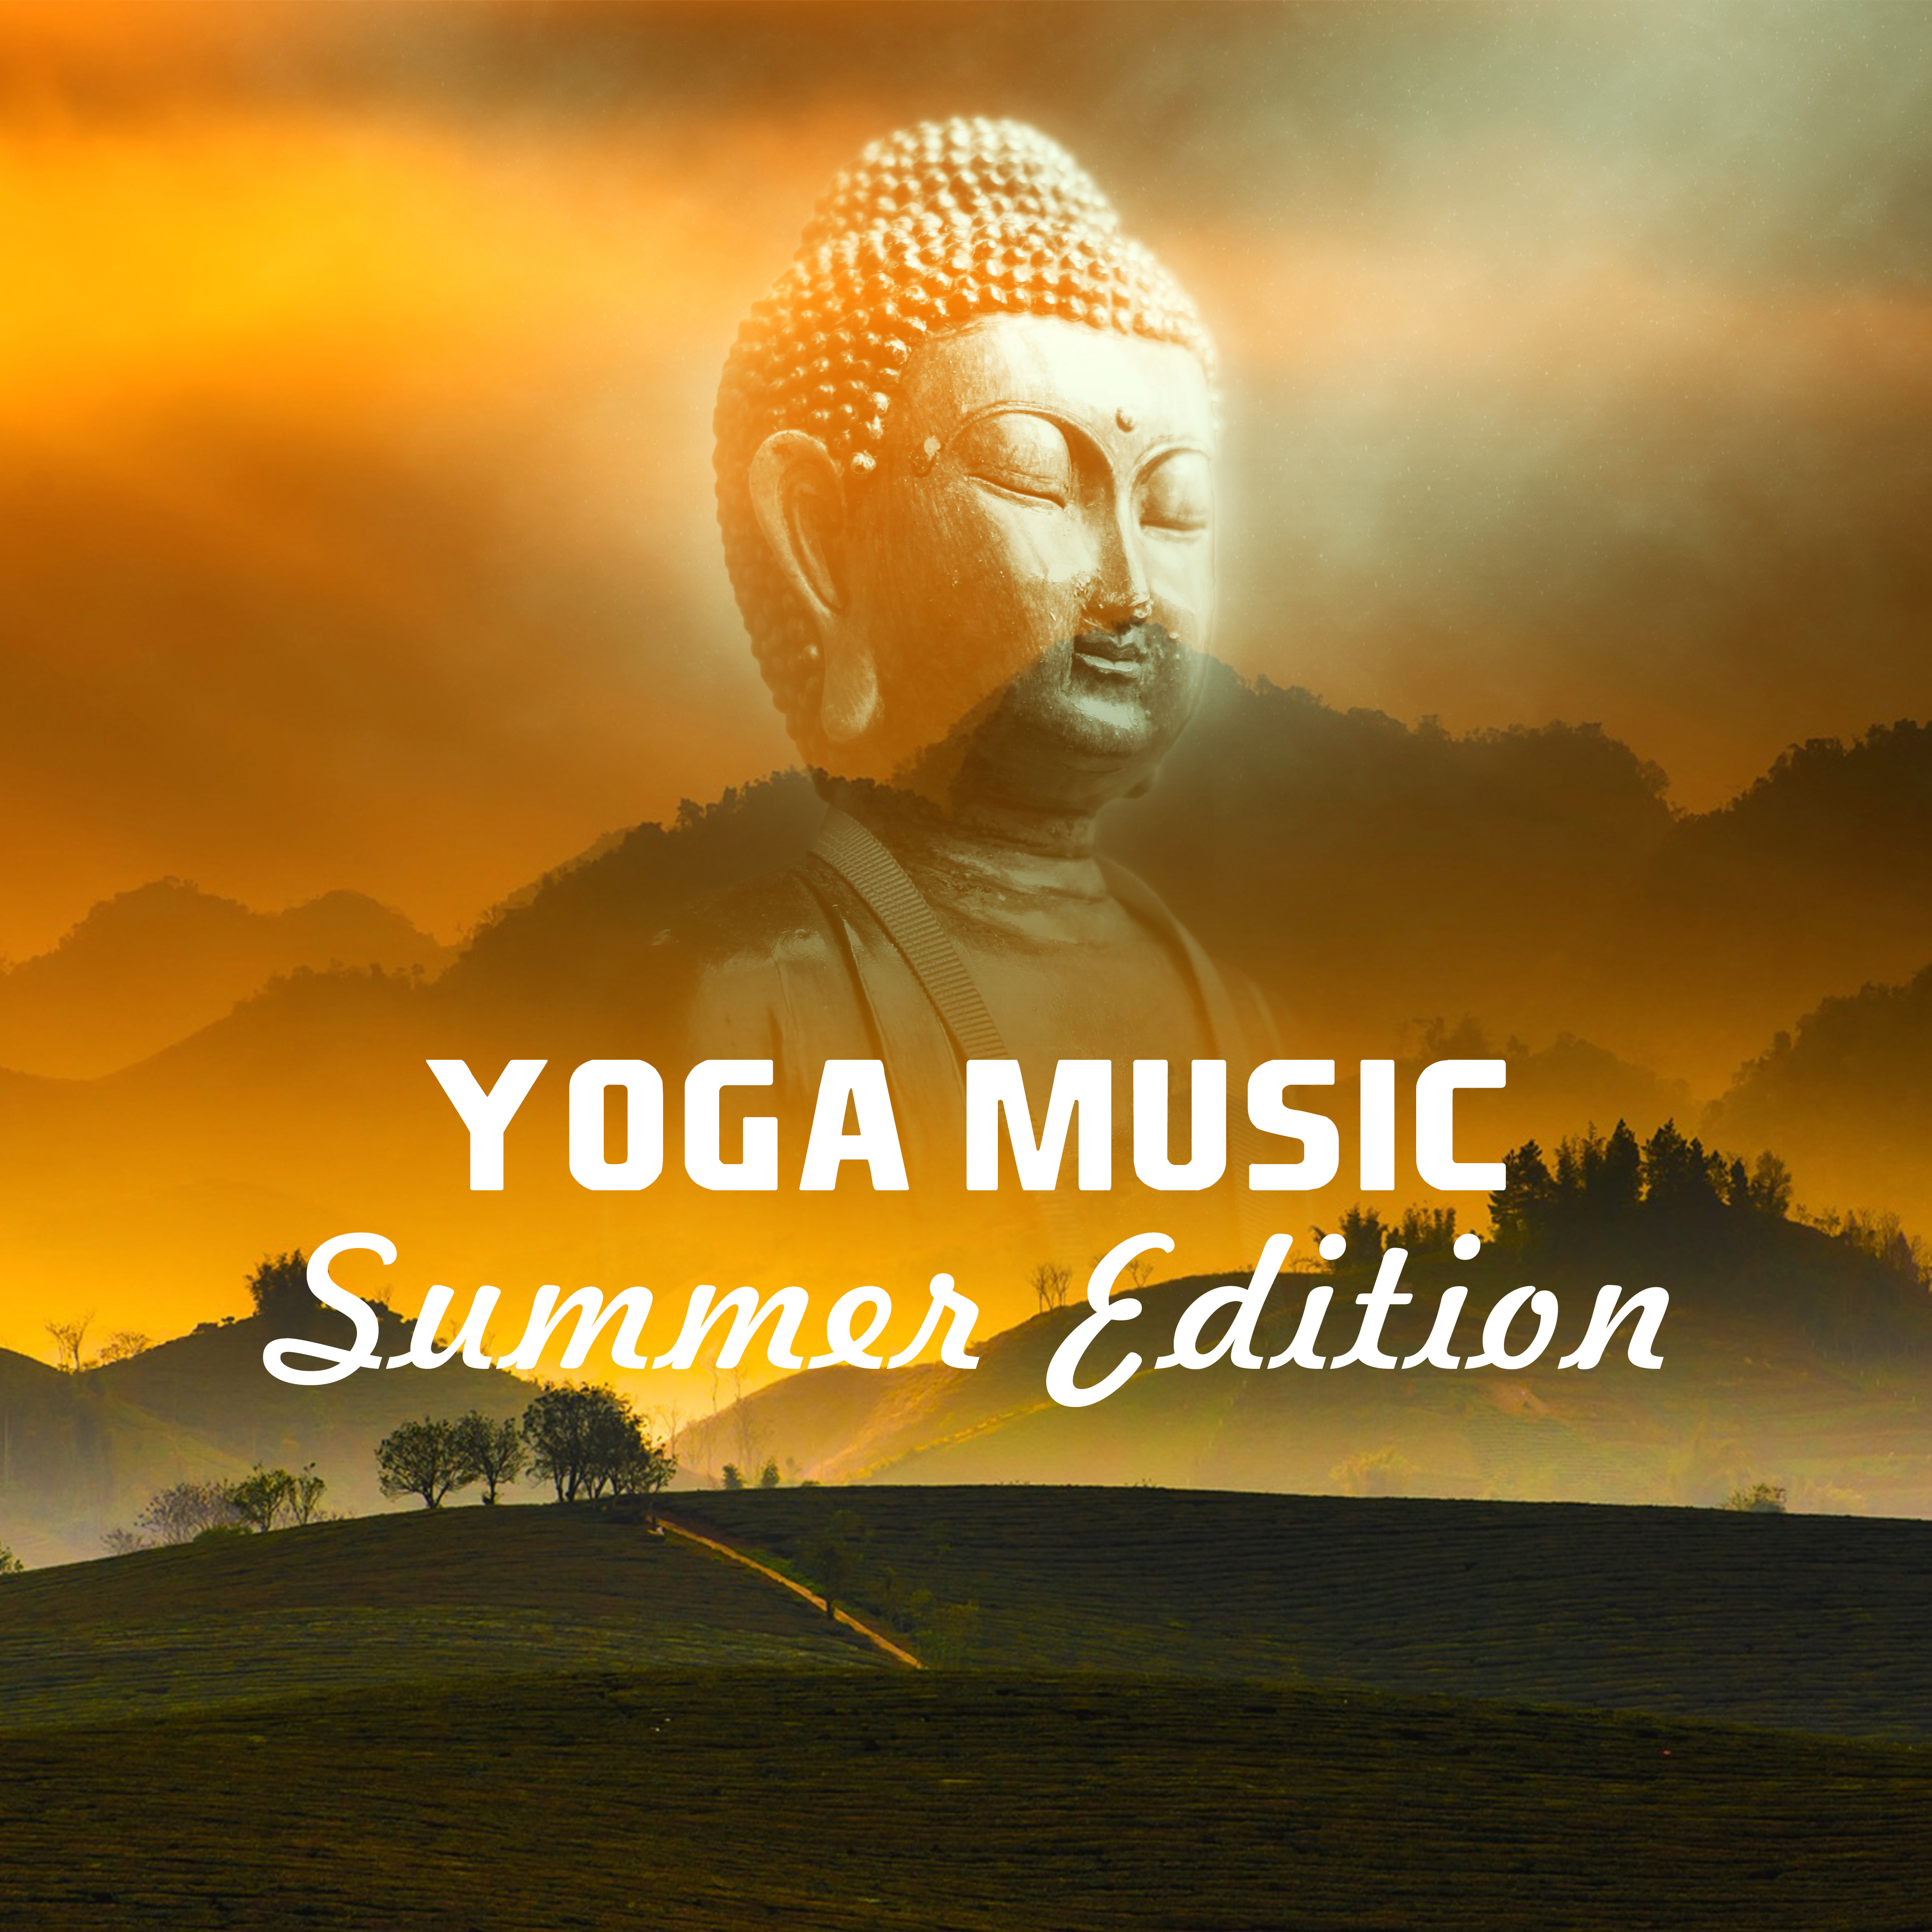 Yoga Music Summer Edition  Relaxation  Meditation, Yoga Music, Zen, Healing Nature Music